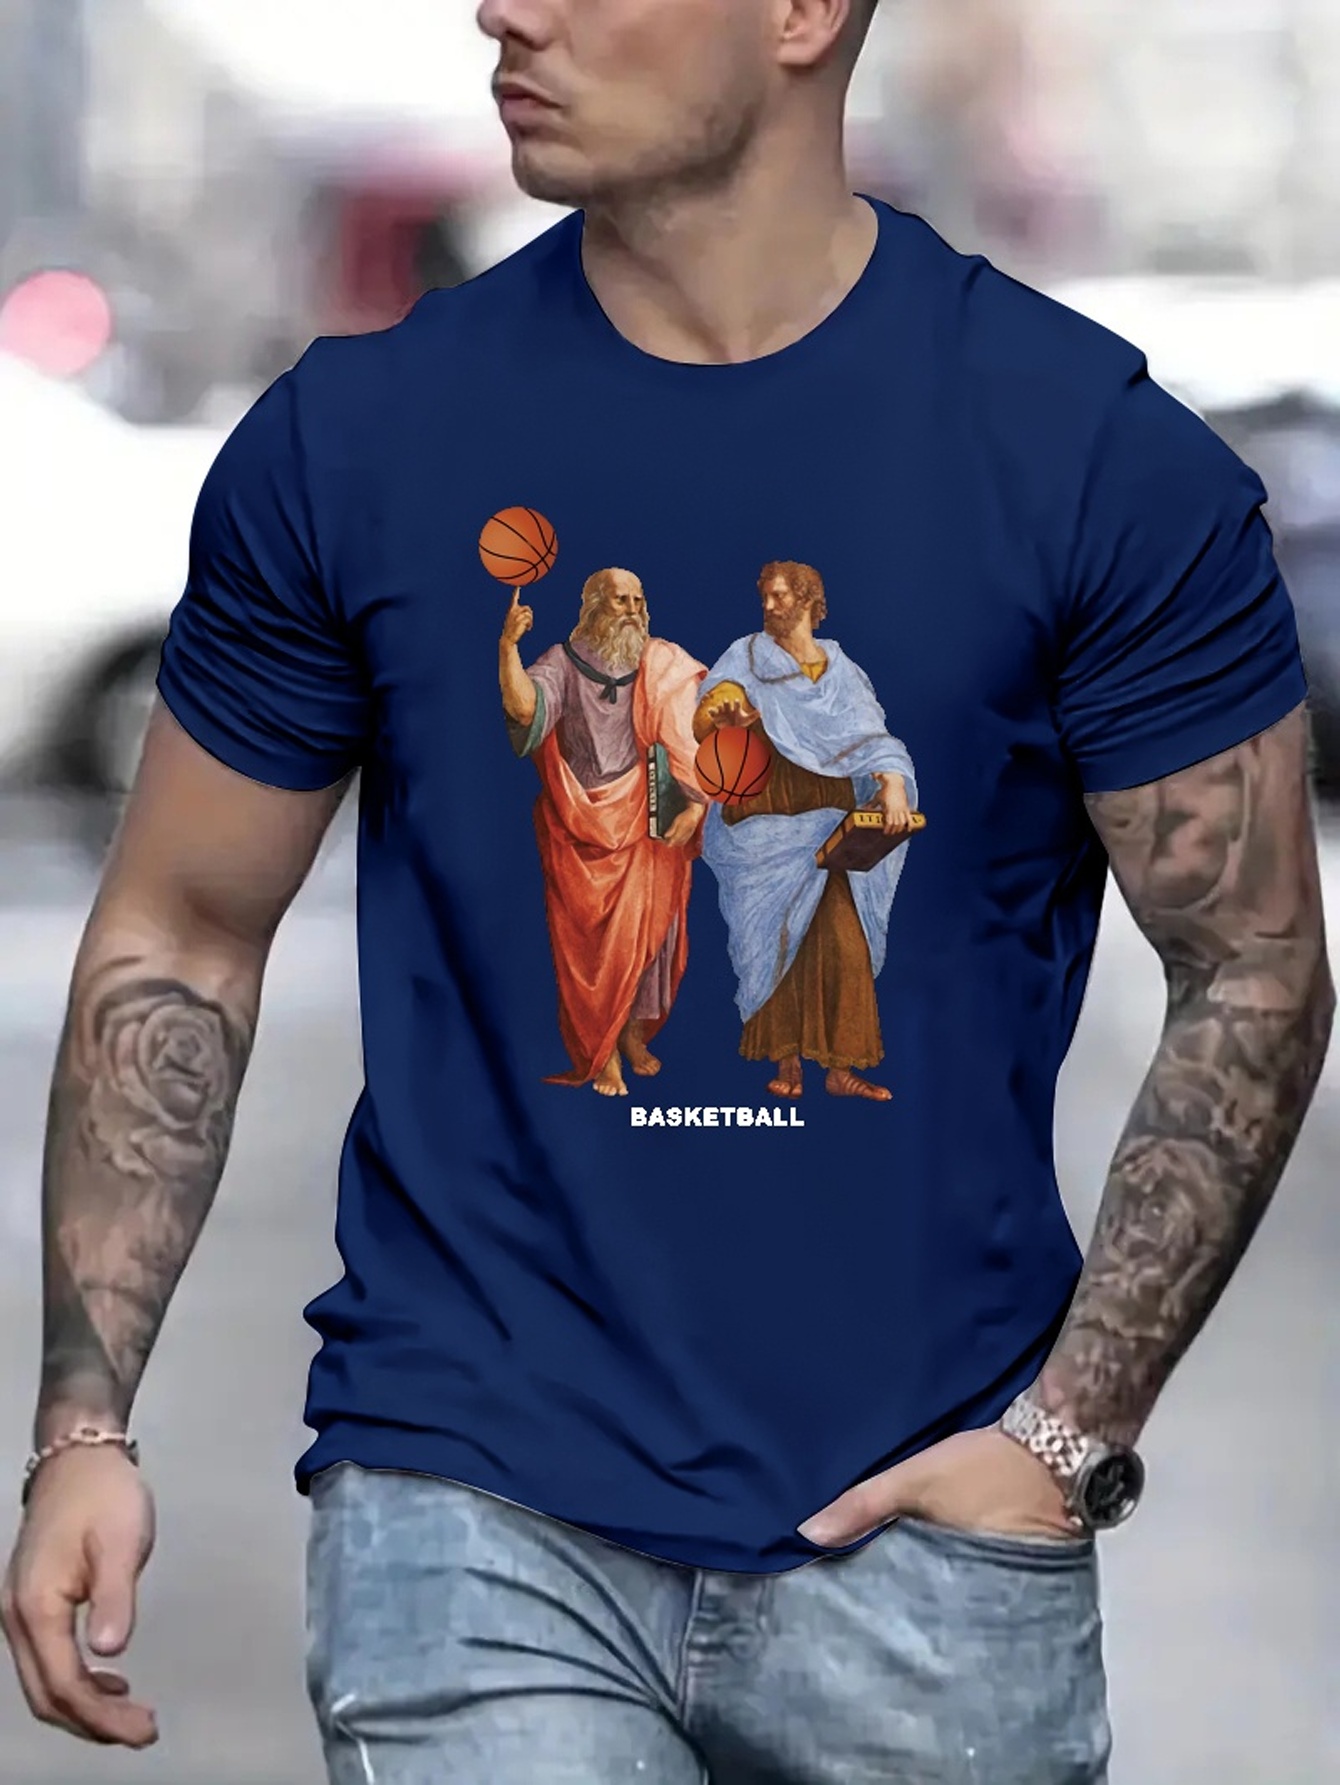 Mens Basketball Graphic T-Shirts.